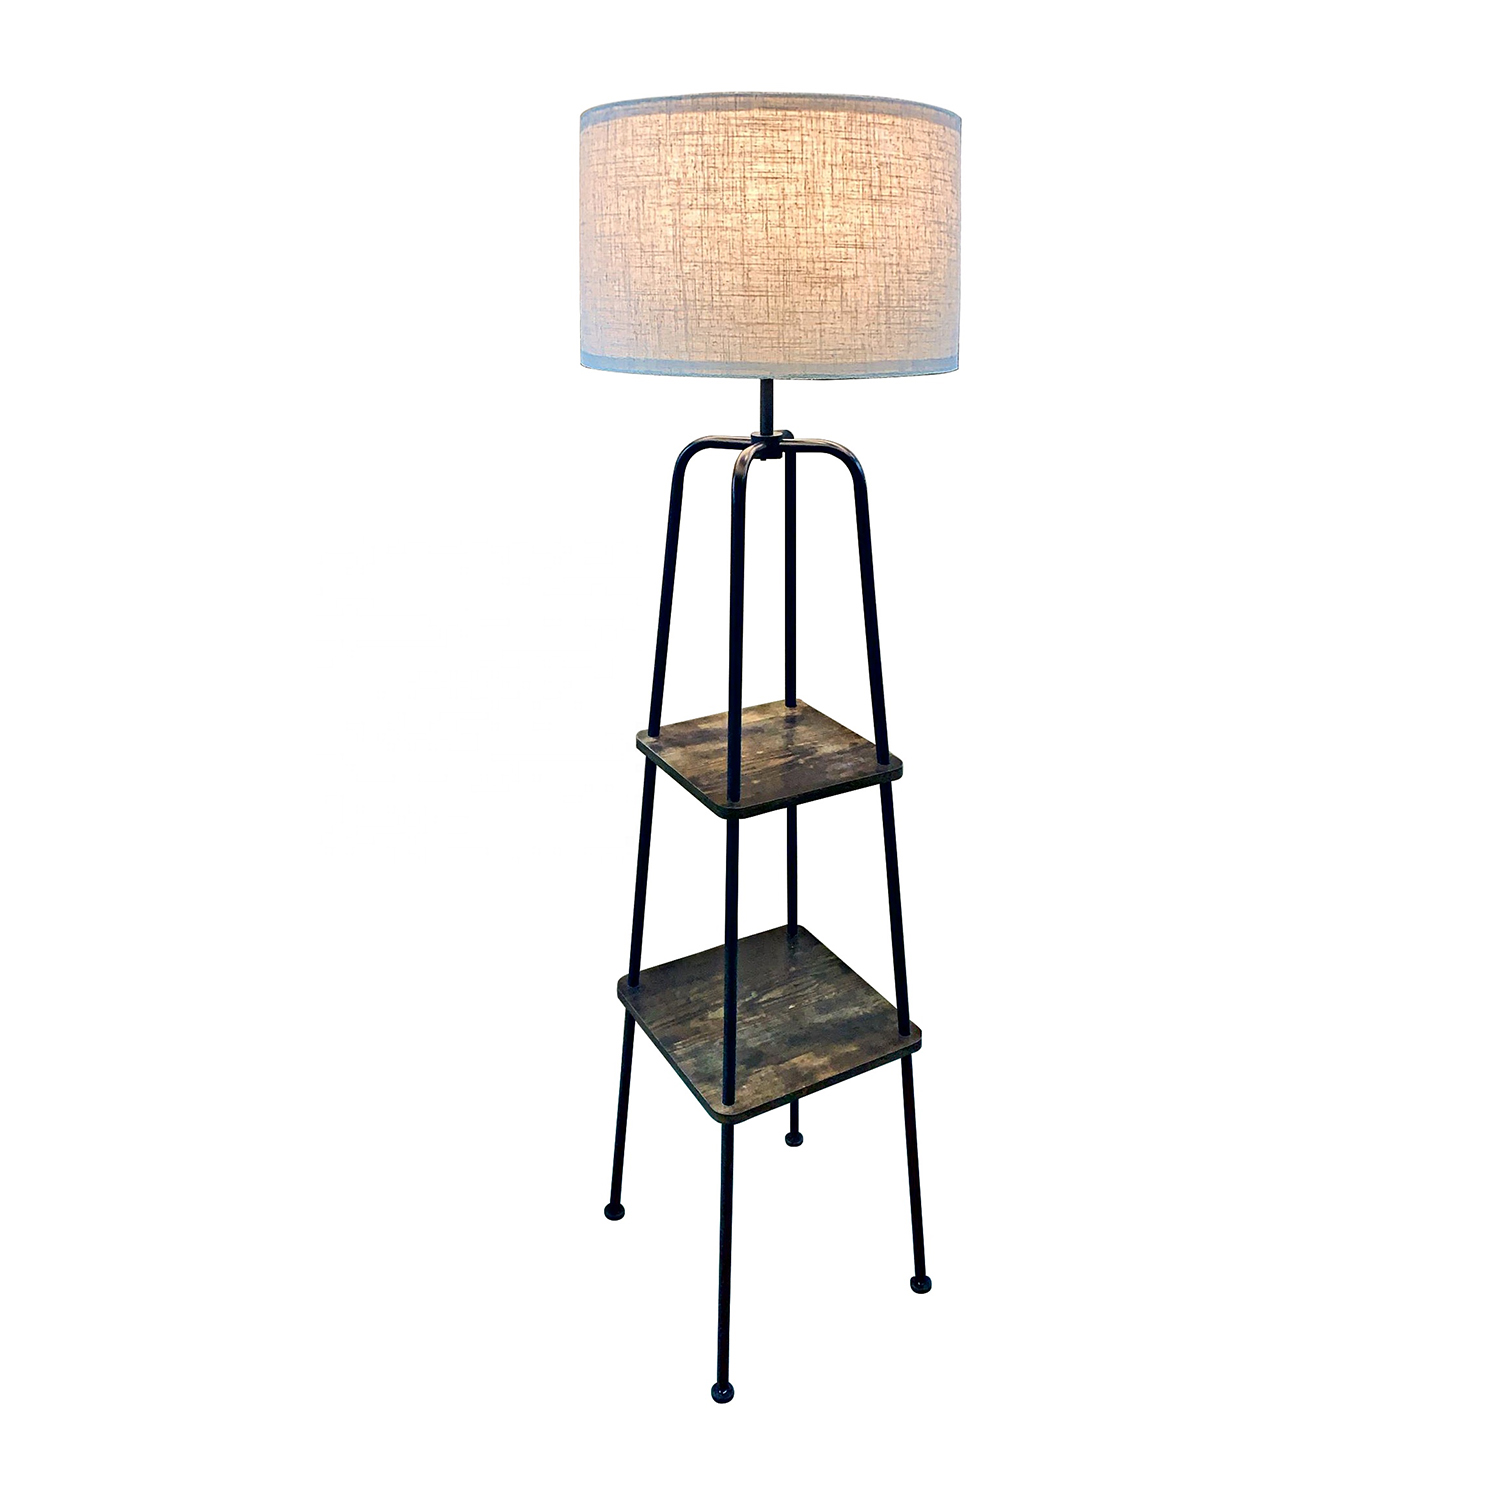 Tripod Floor lamp with fabric shade